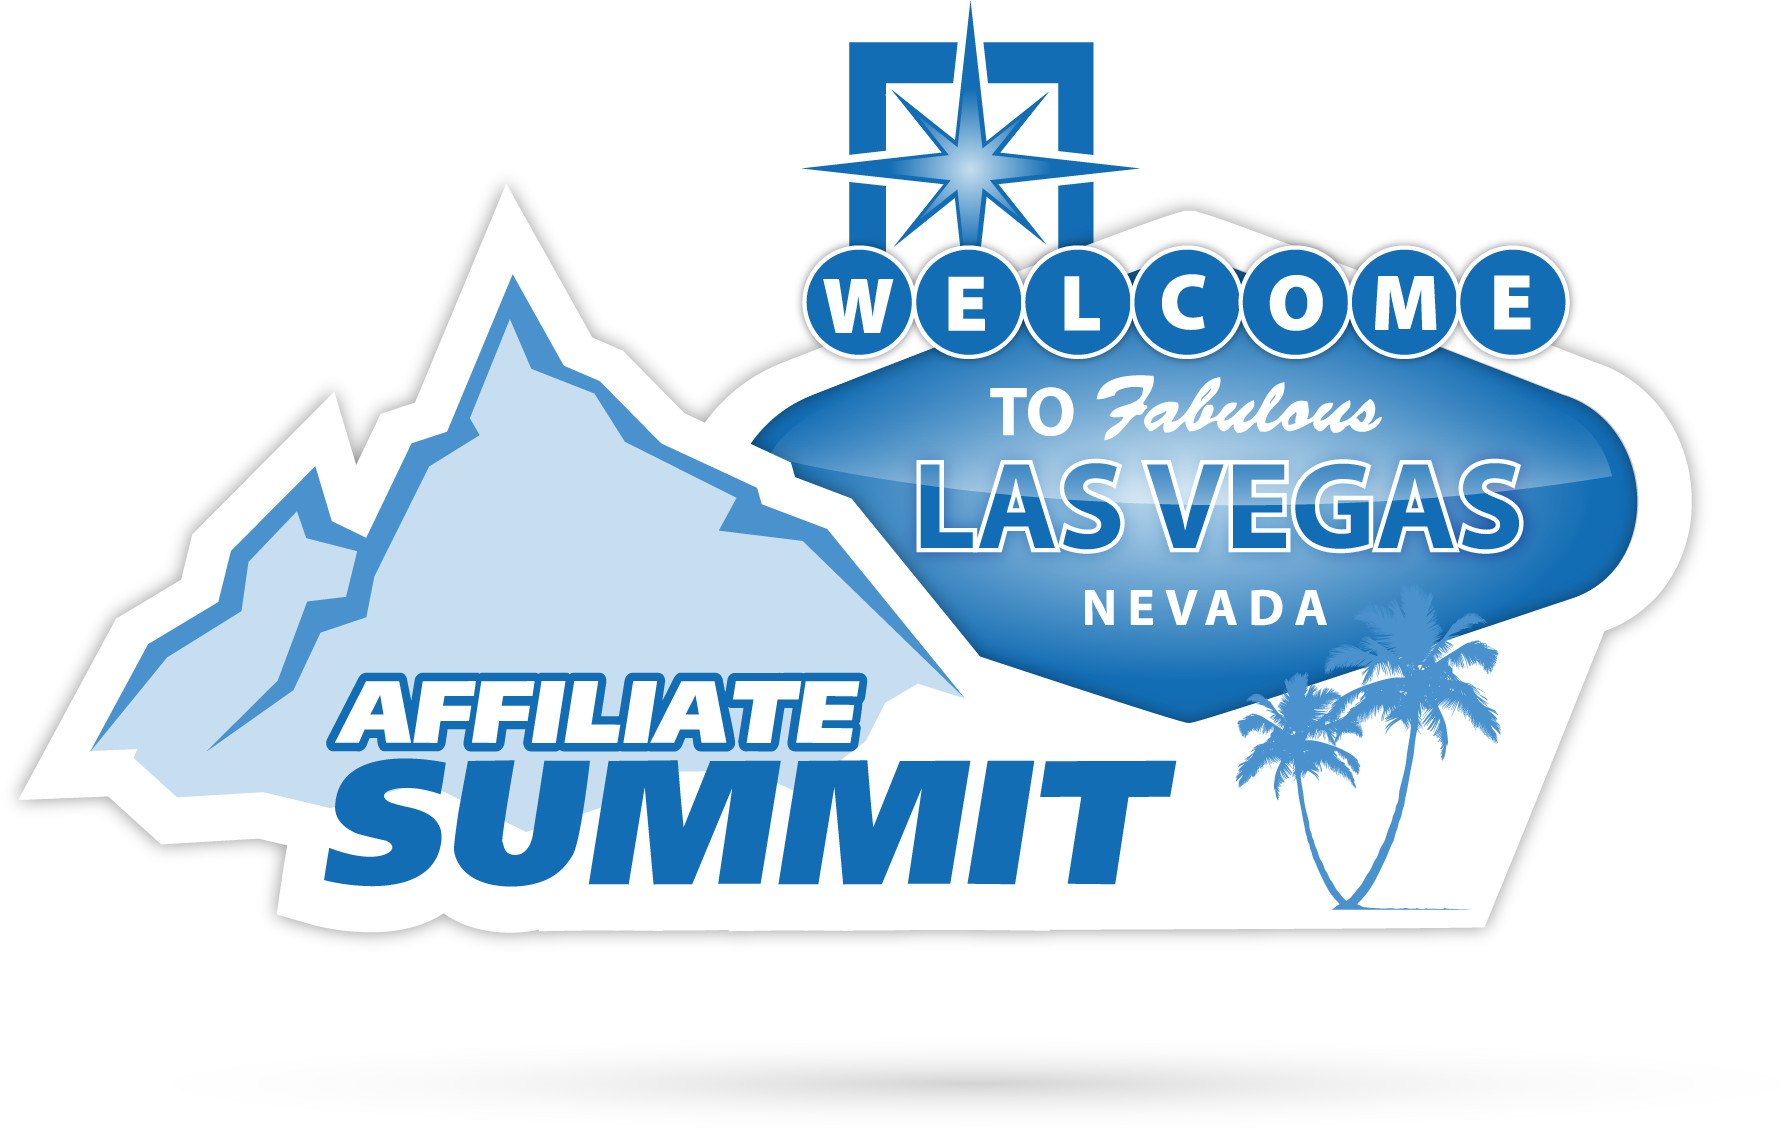 Download Affiliate Summit Las Vegas Sign